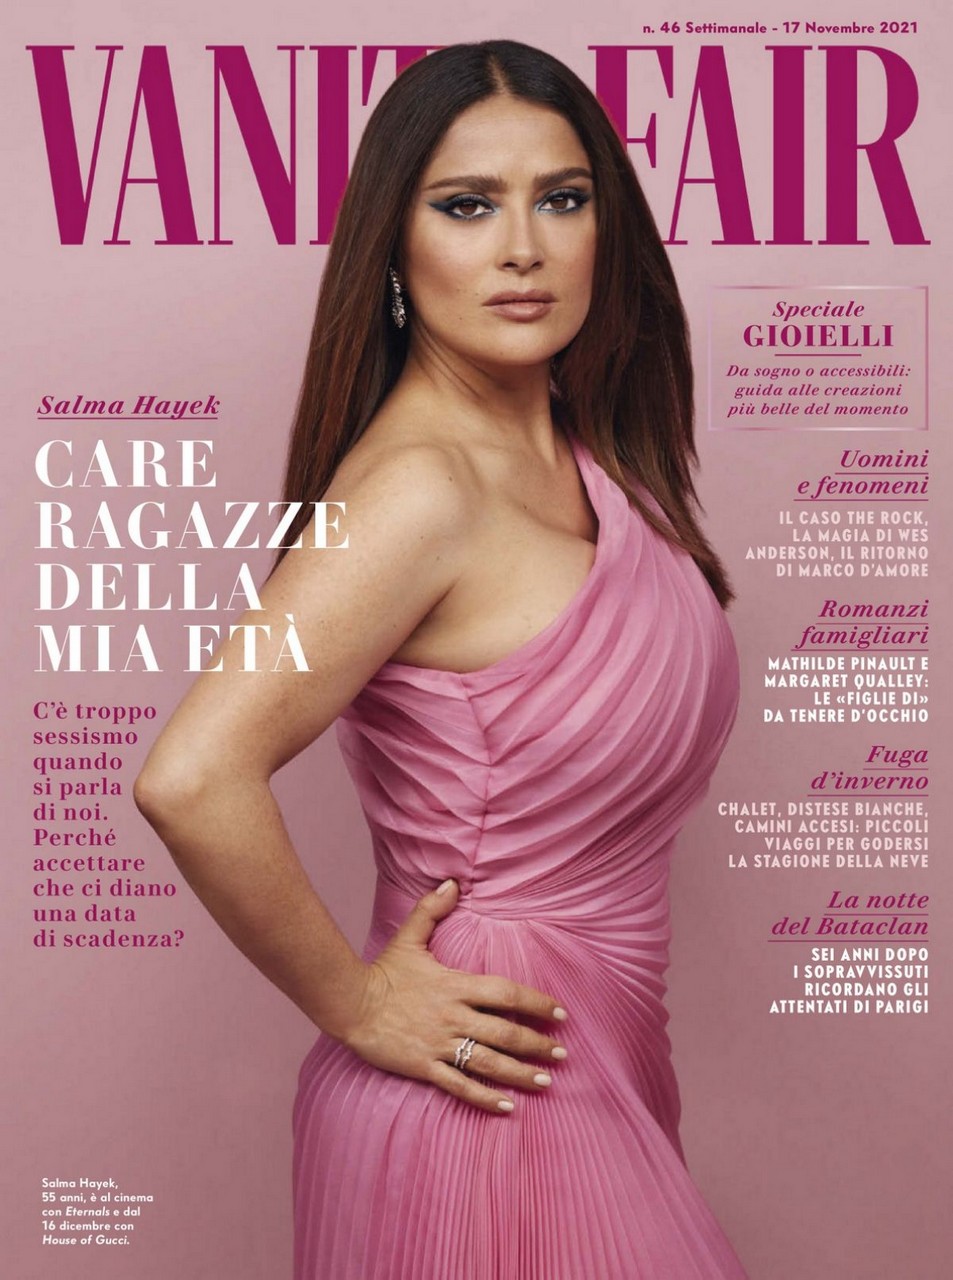 Salma Hayek Vanity Fair Magazine Italy November